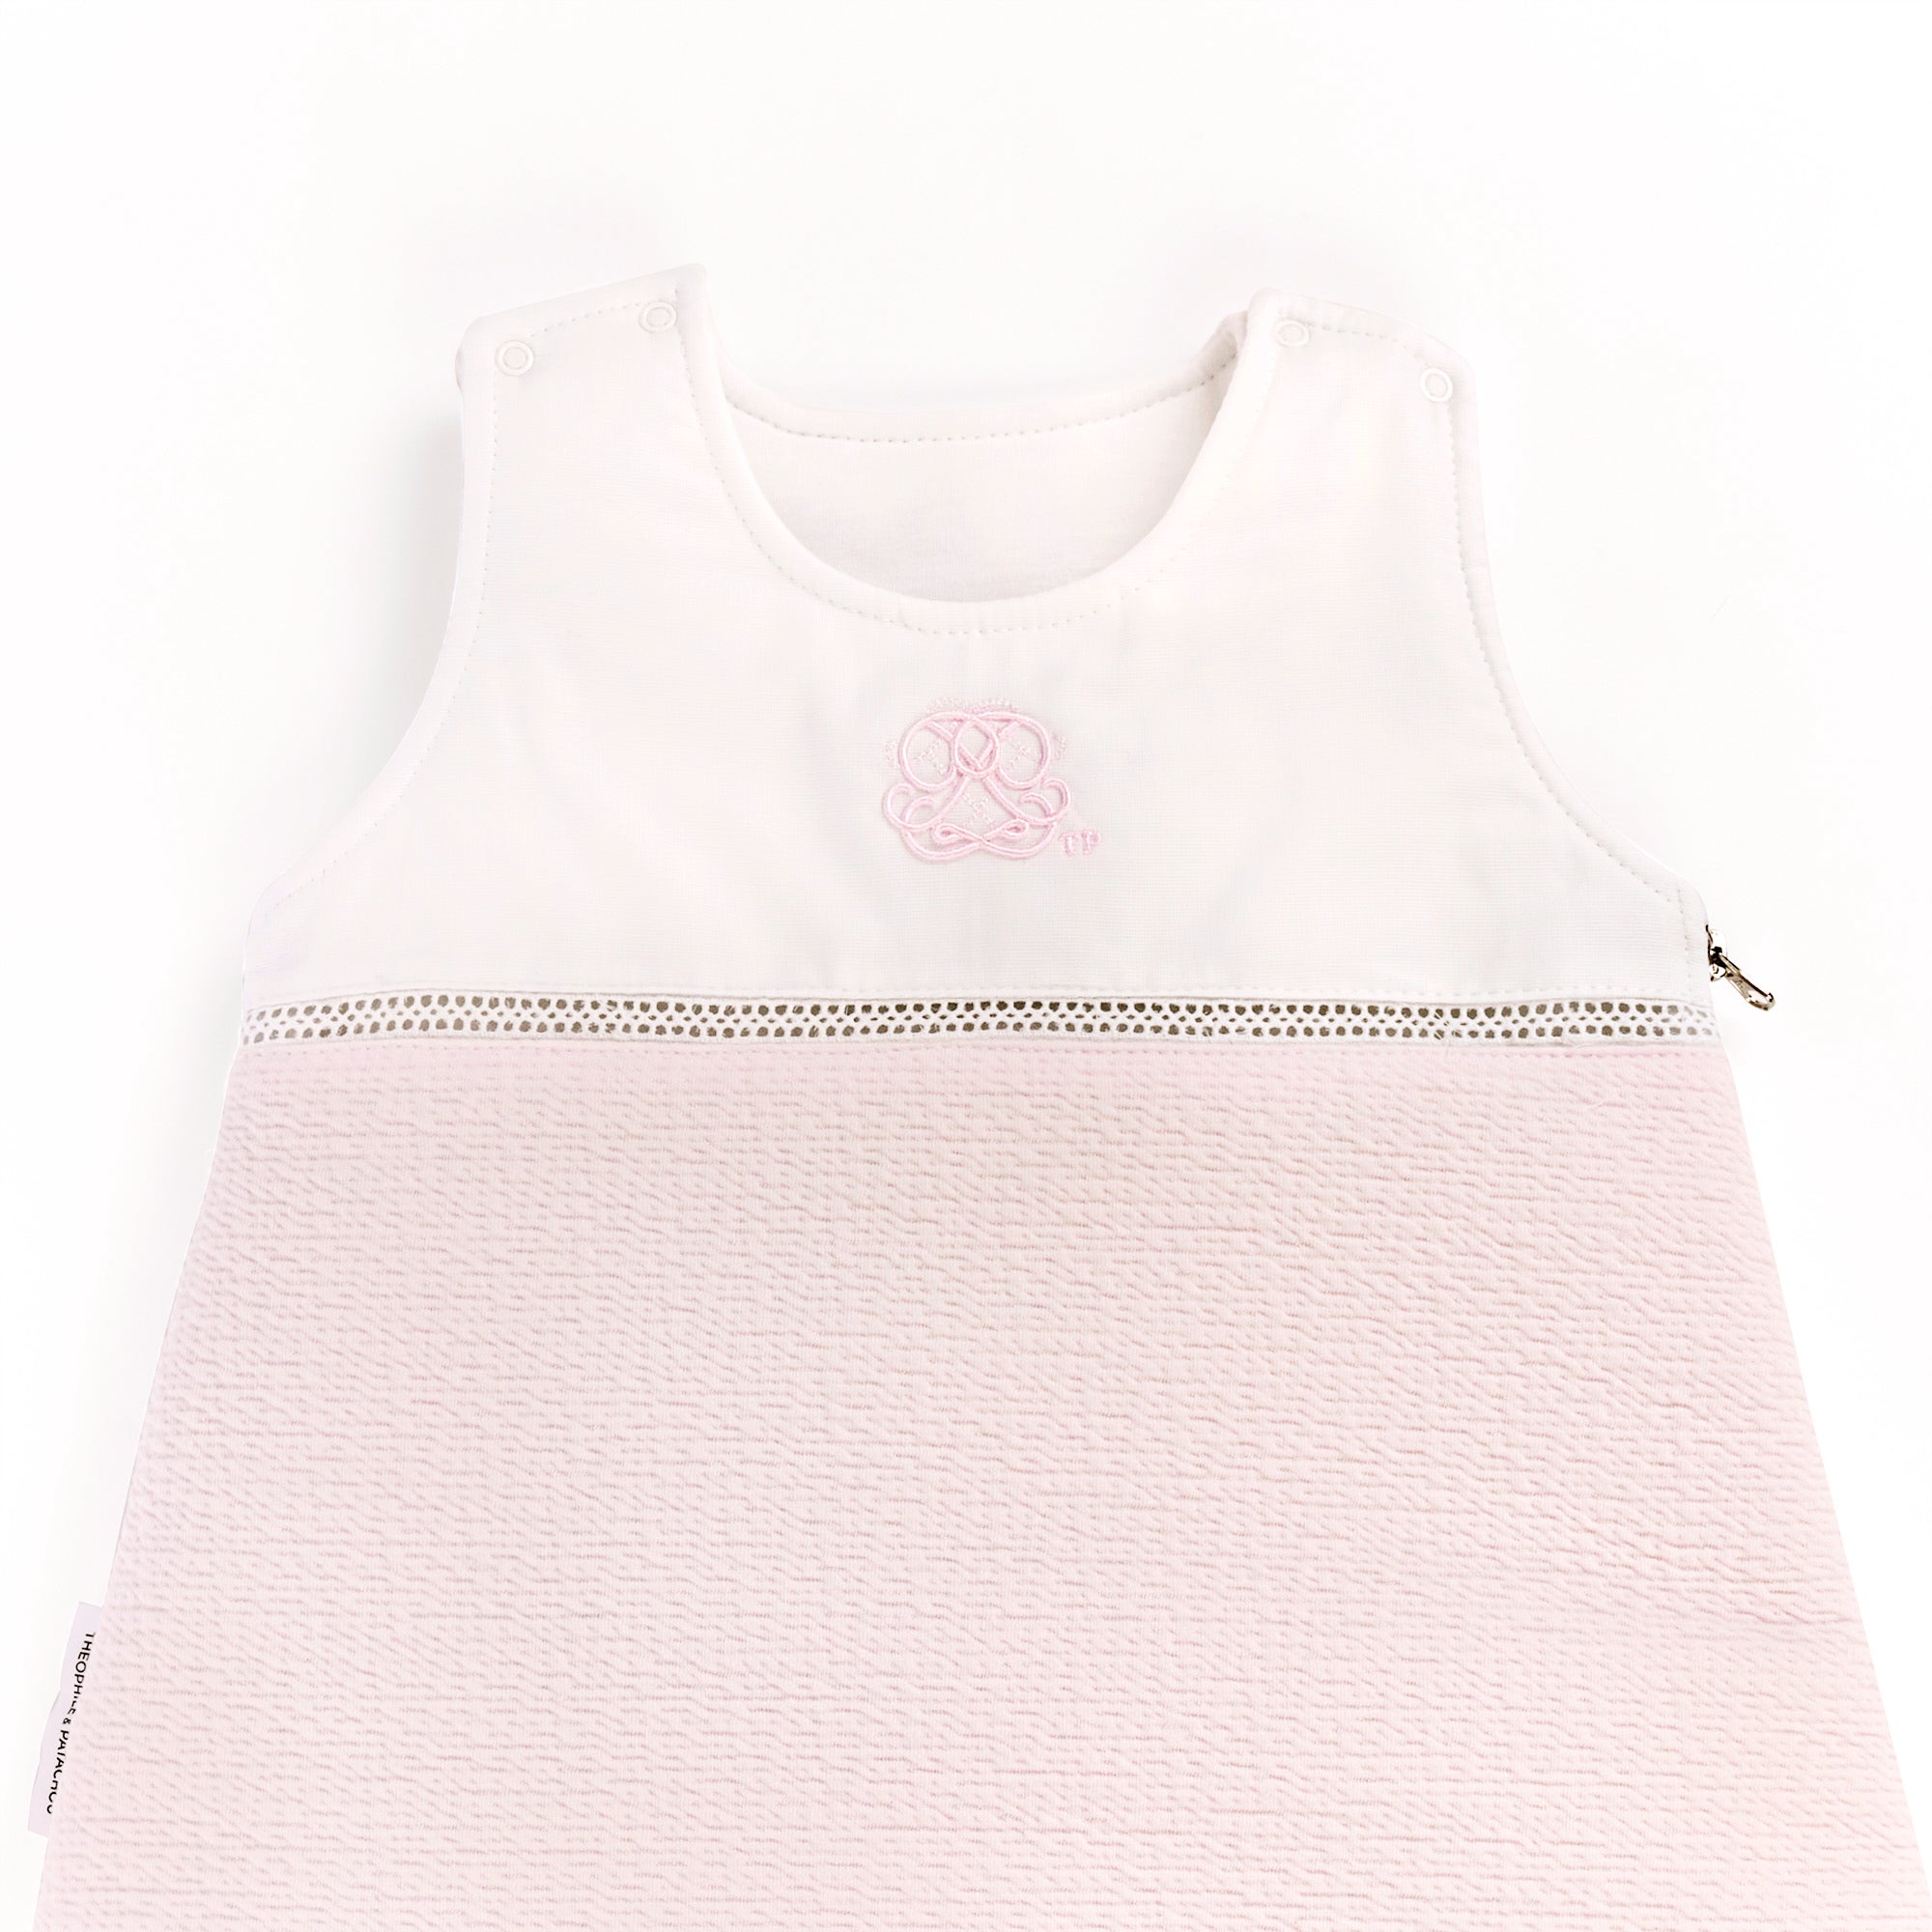 Theophile & Patachou Baby Sleeping Bag 70 cm - Cotton Pink